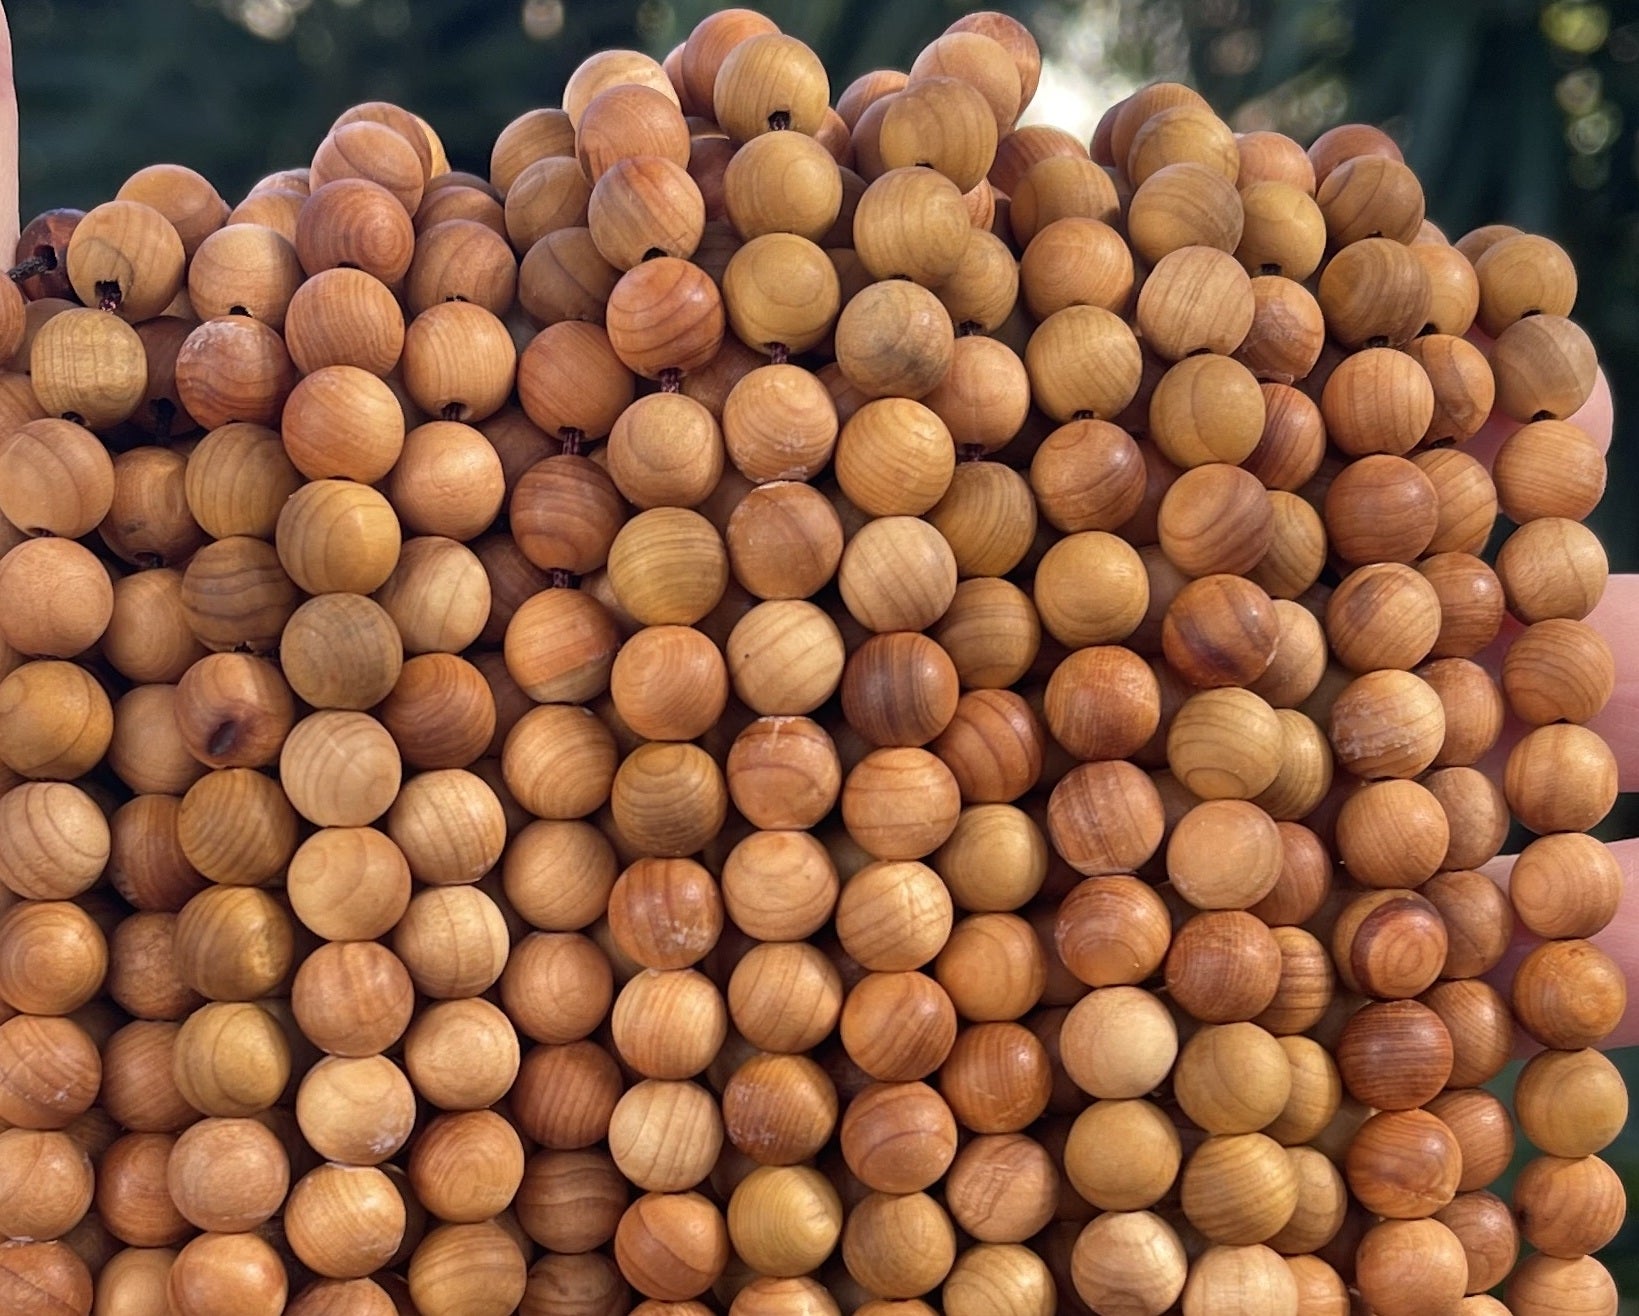 Golden Sandalwood 8mm round natural aromatic wood beads 16" strand - Oz Beads 